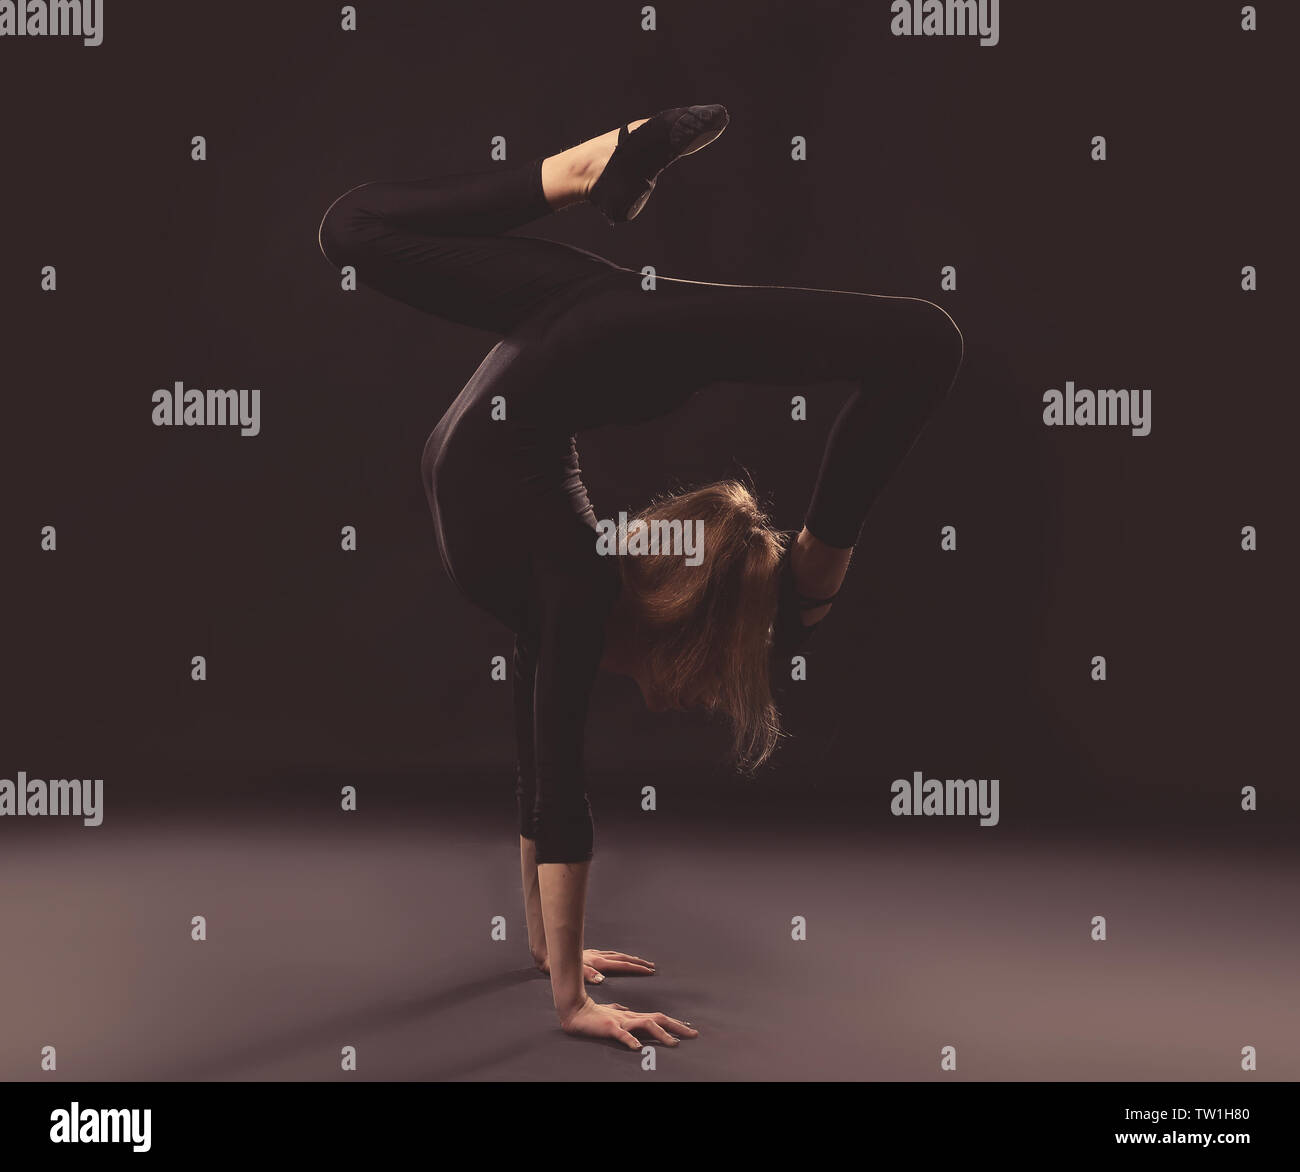 Young girl doing gymnastics on dark background Stock Photo - Alamy